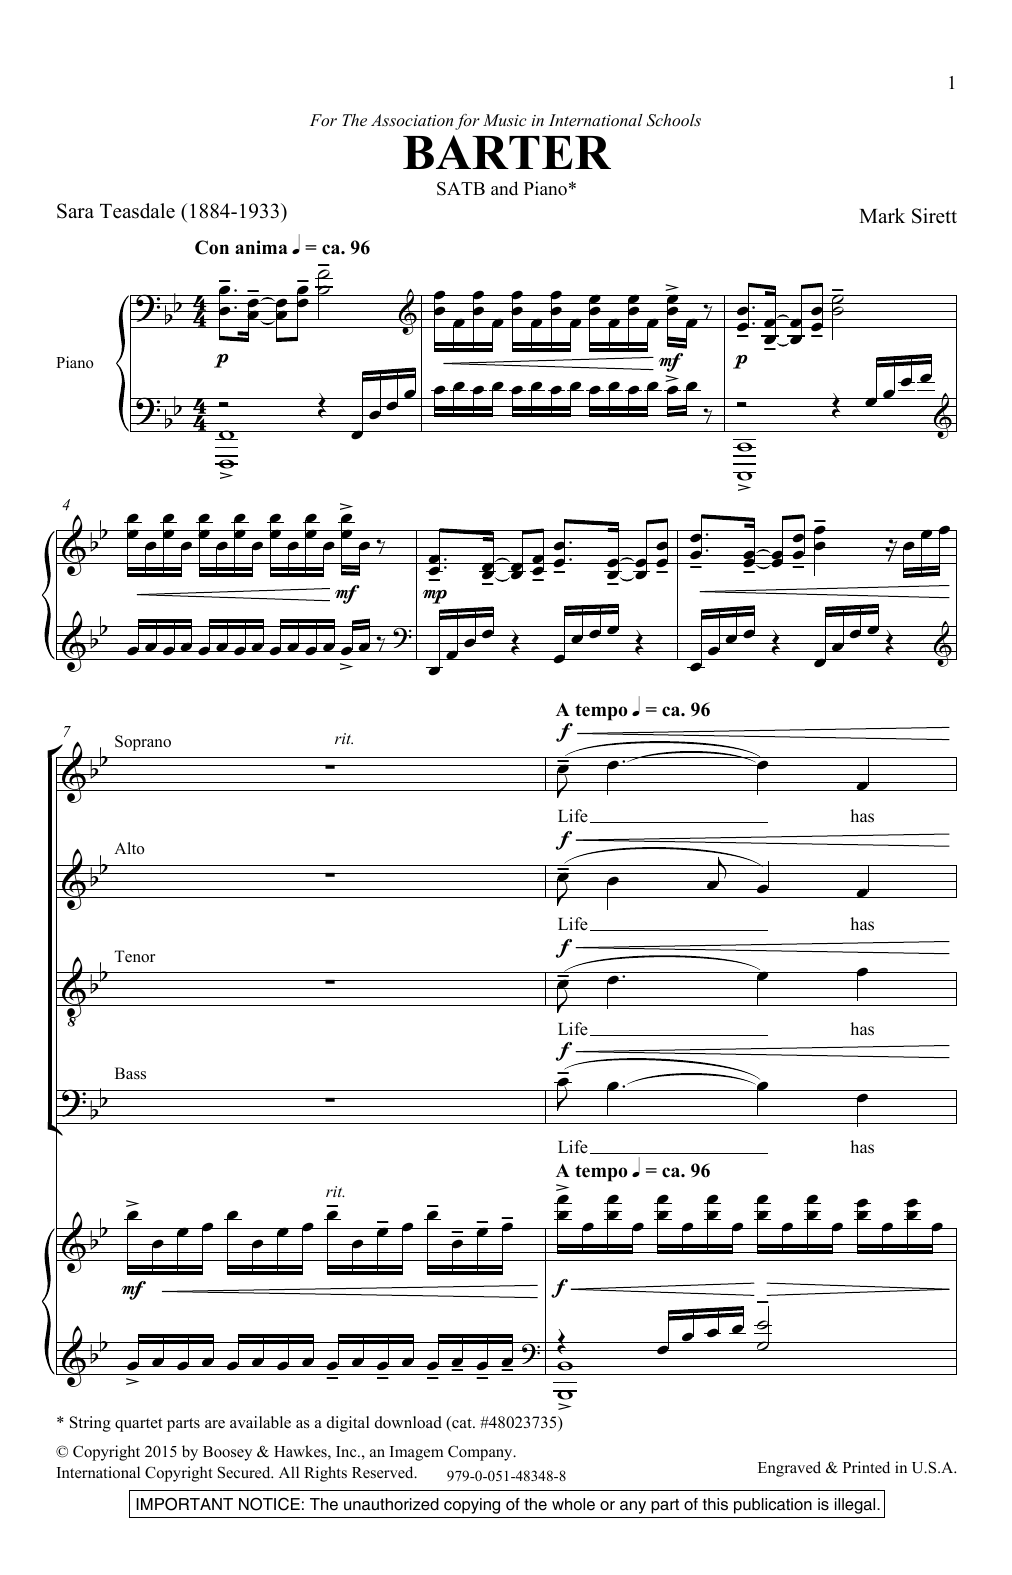 Mark Sirett Barter Sheet Music Notes & Chords for SATB - Download or Print PDF